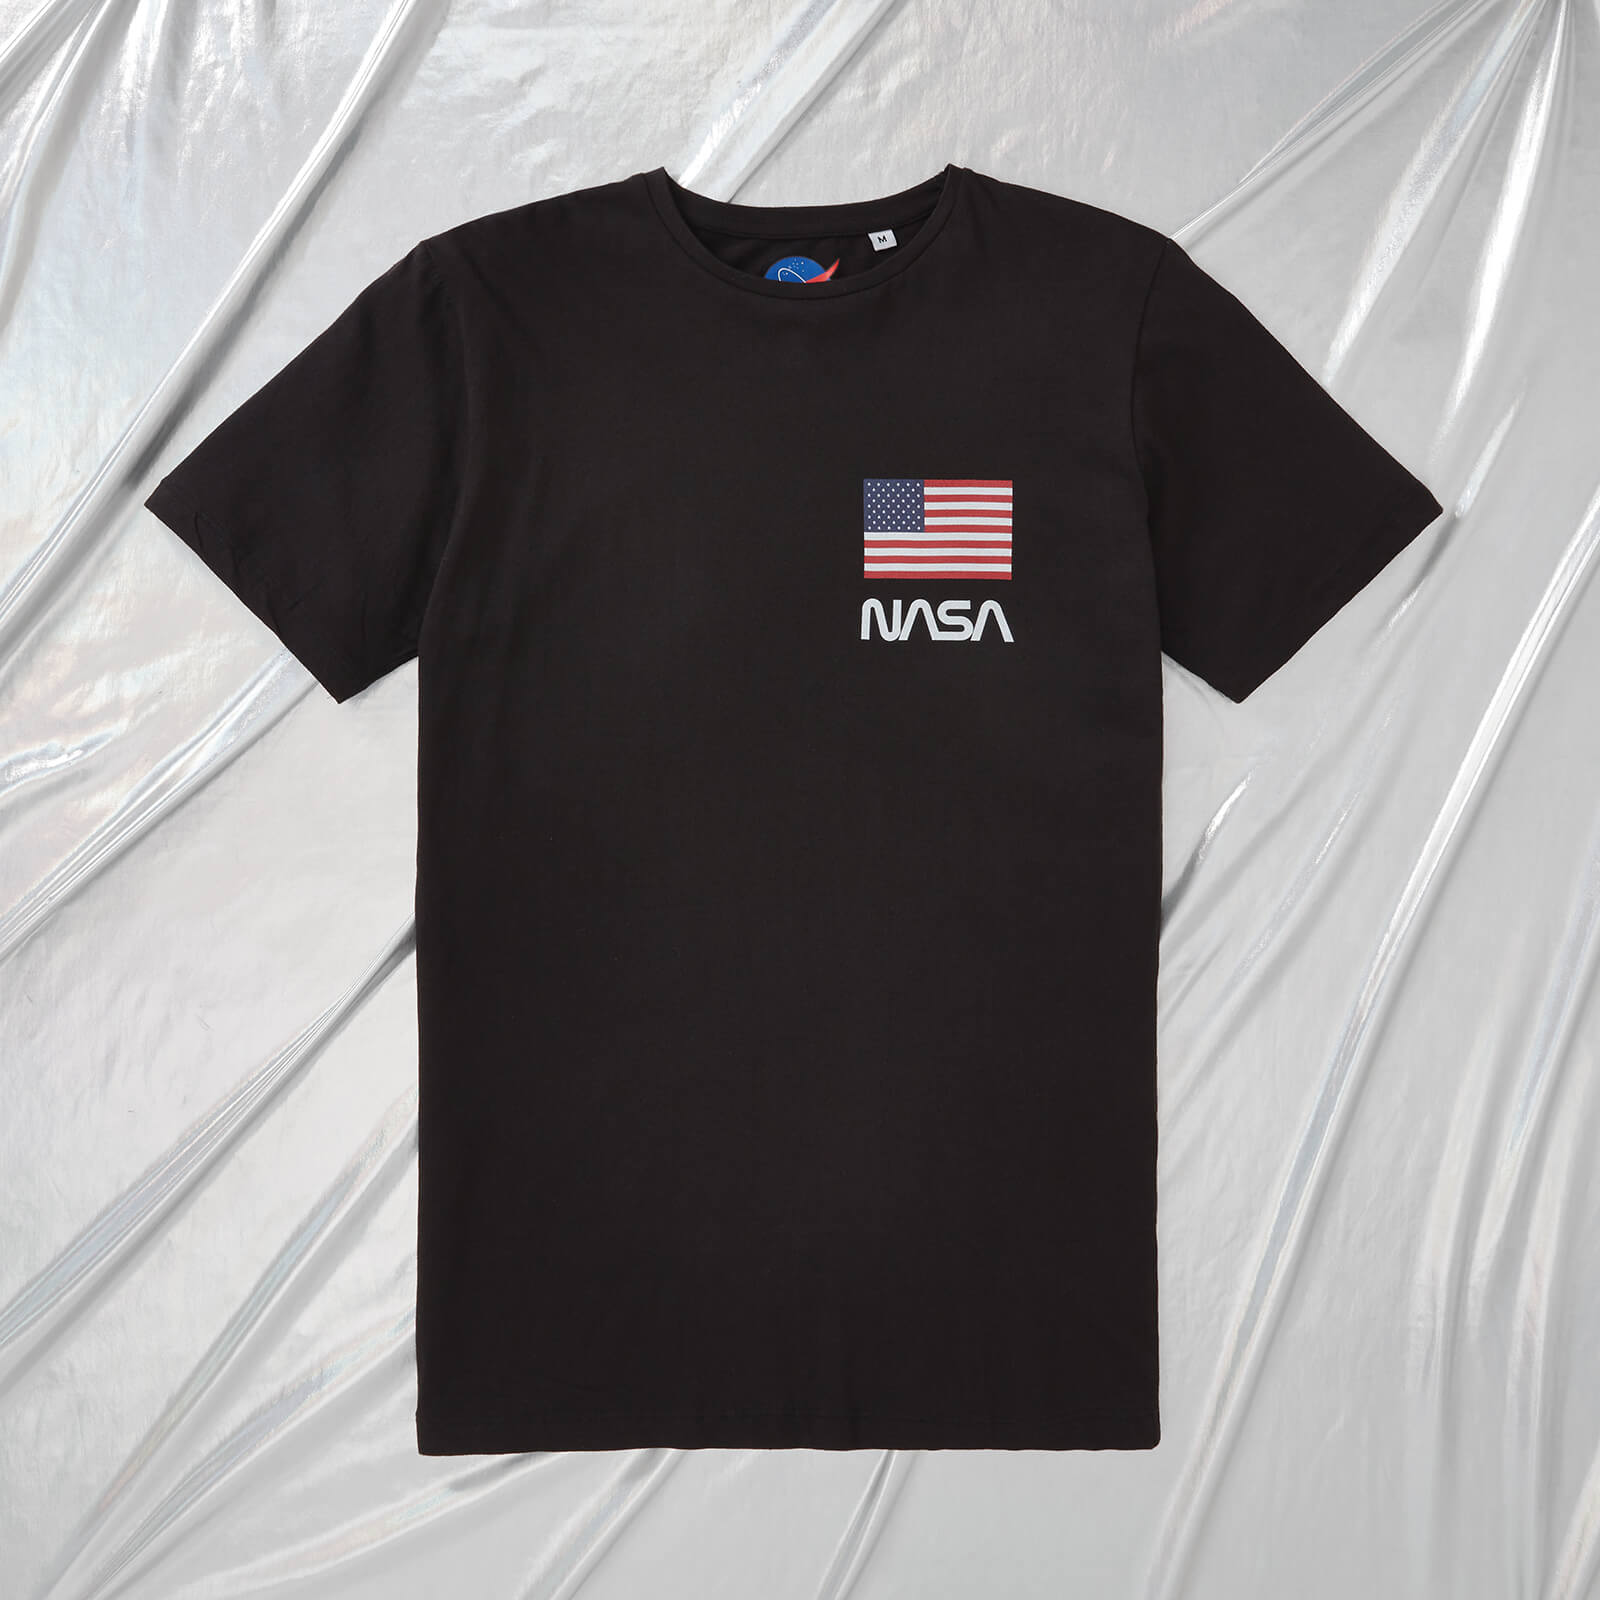 NASA Apollo 11 One Small Step Unisex T-Shirt - Black - M